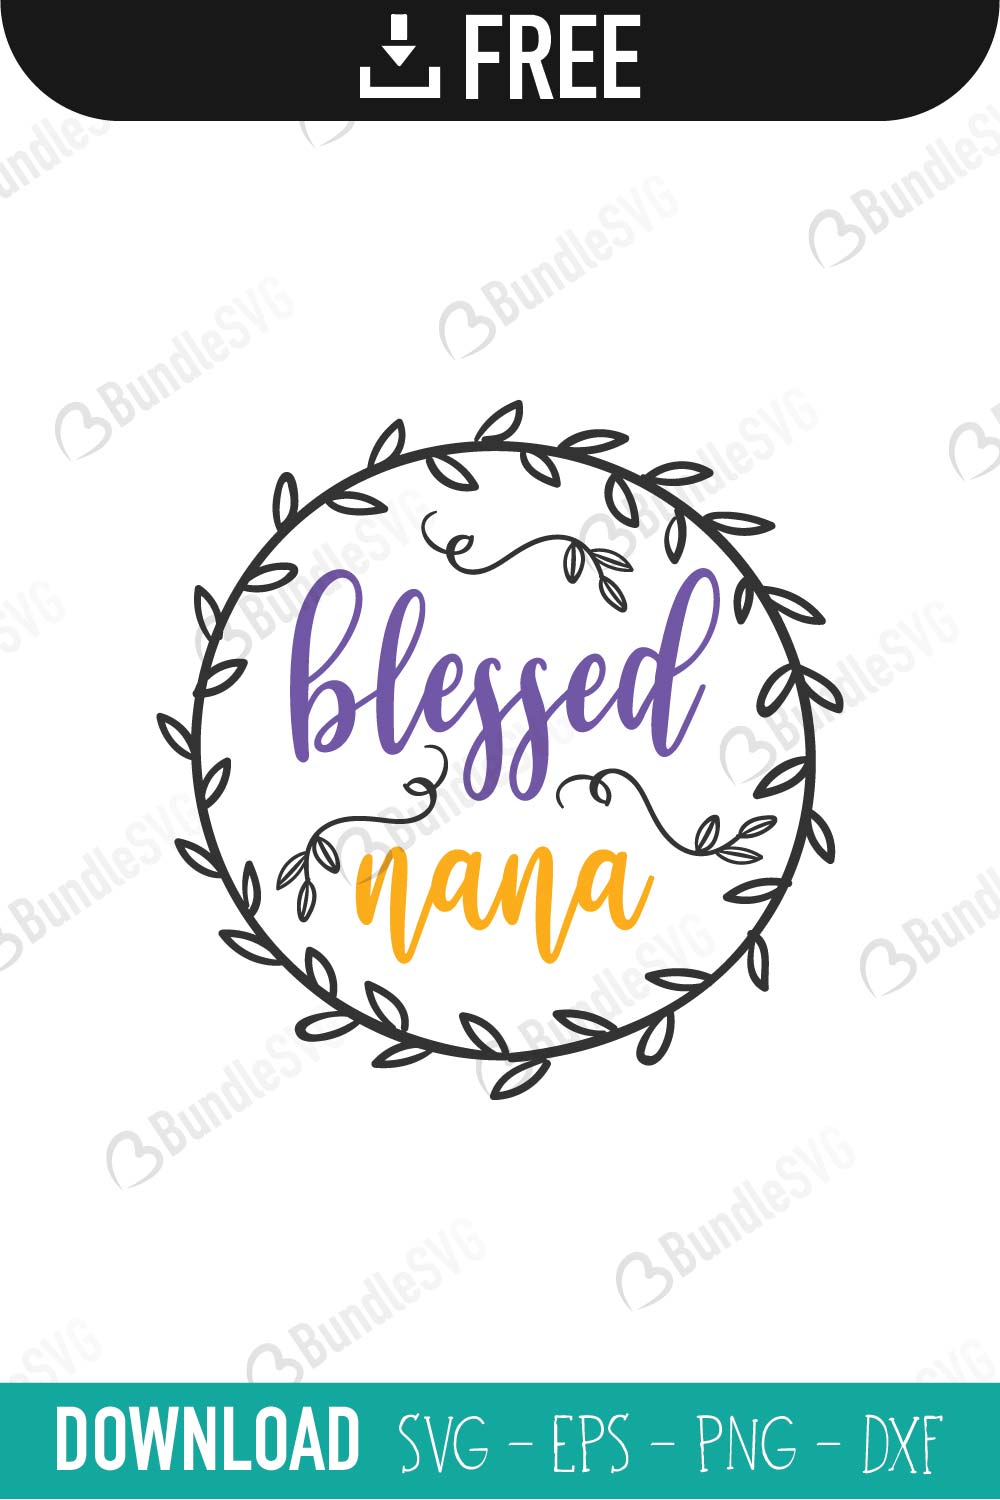 Download Blessed Nana Svg Cut Files Free Download Bundlesvg